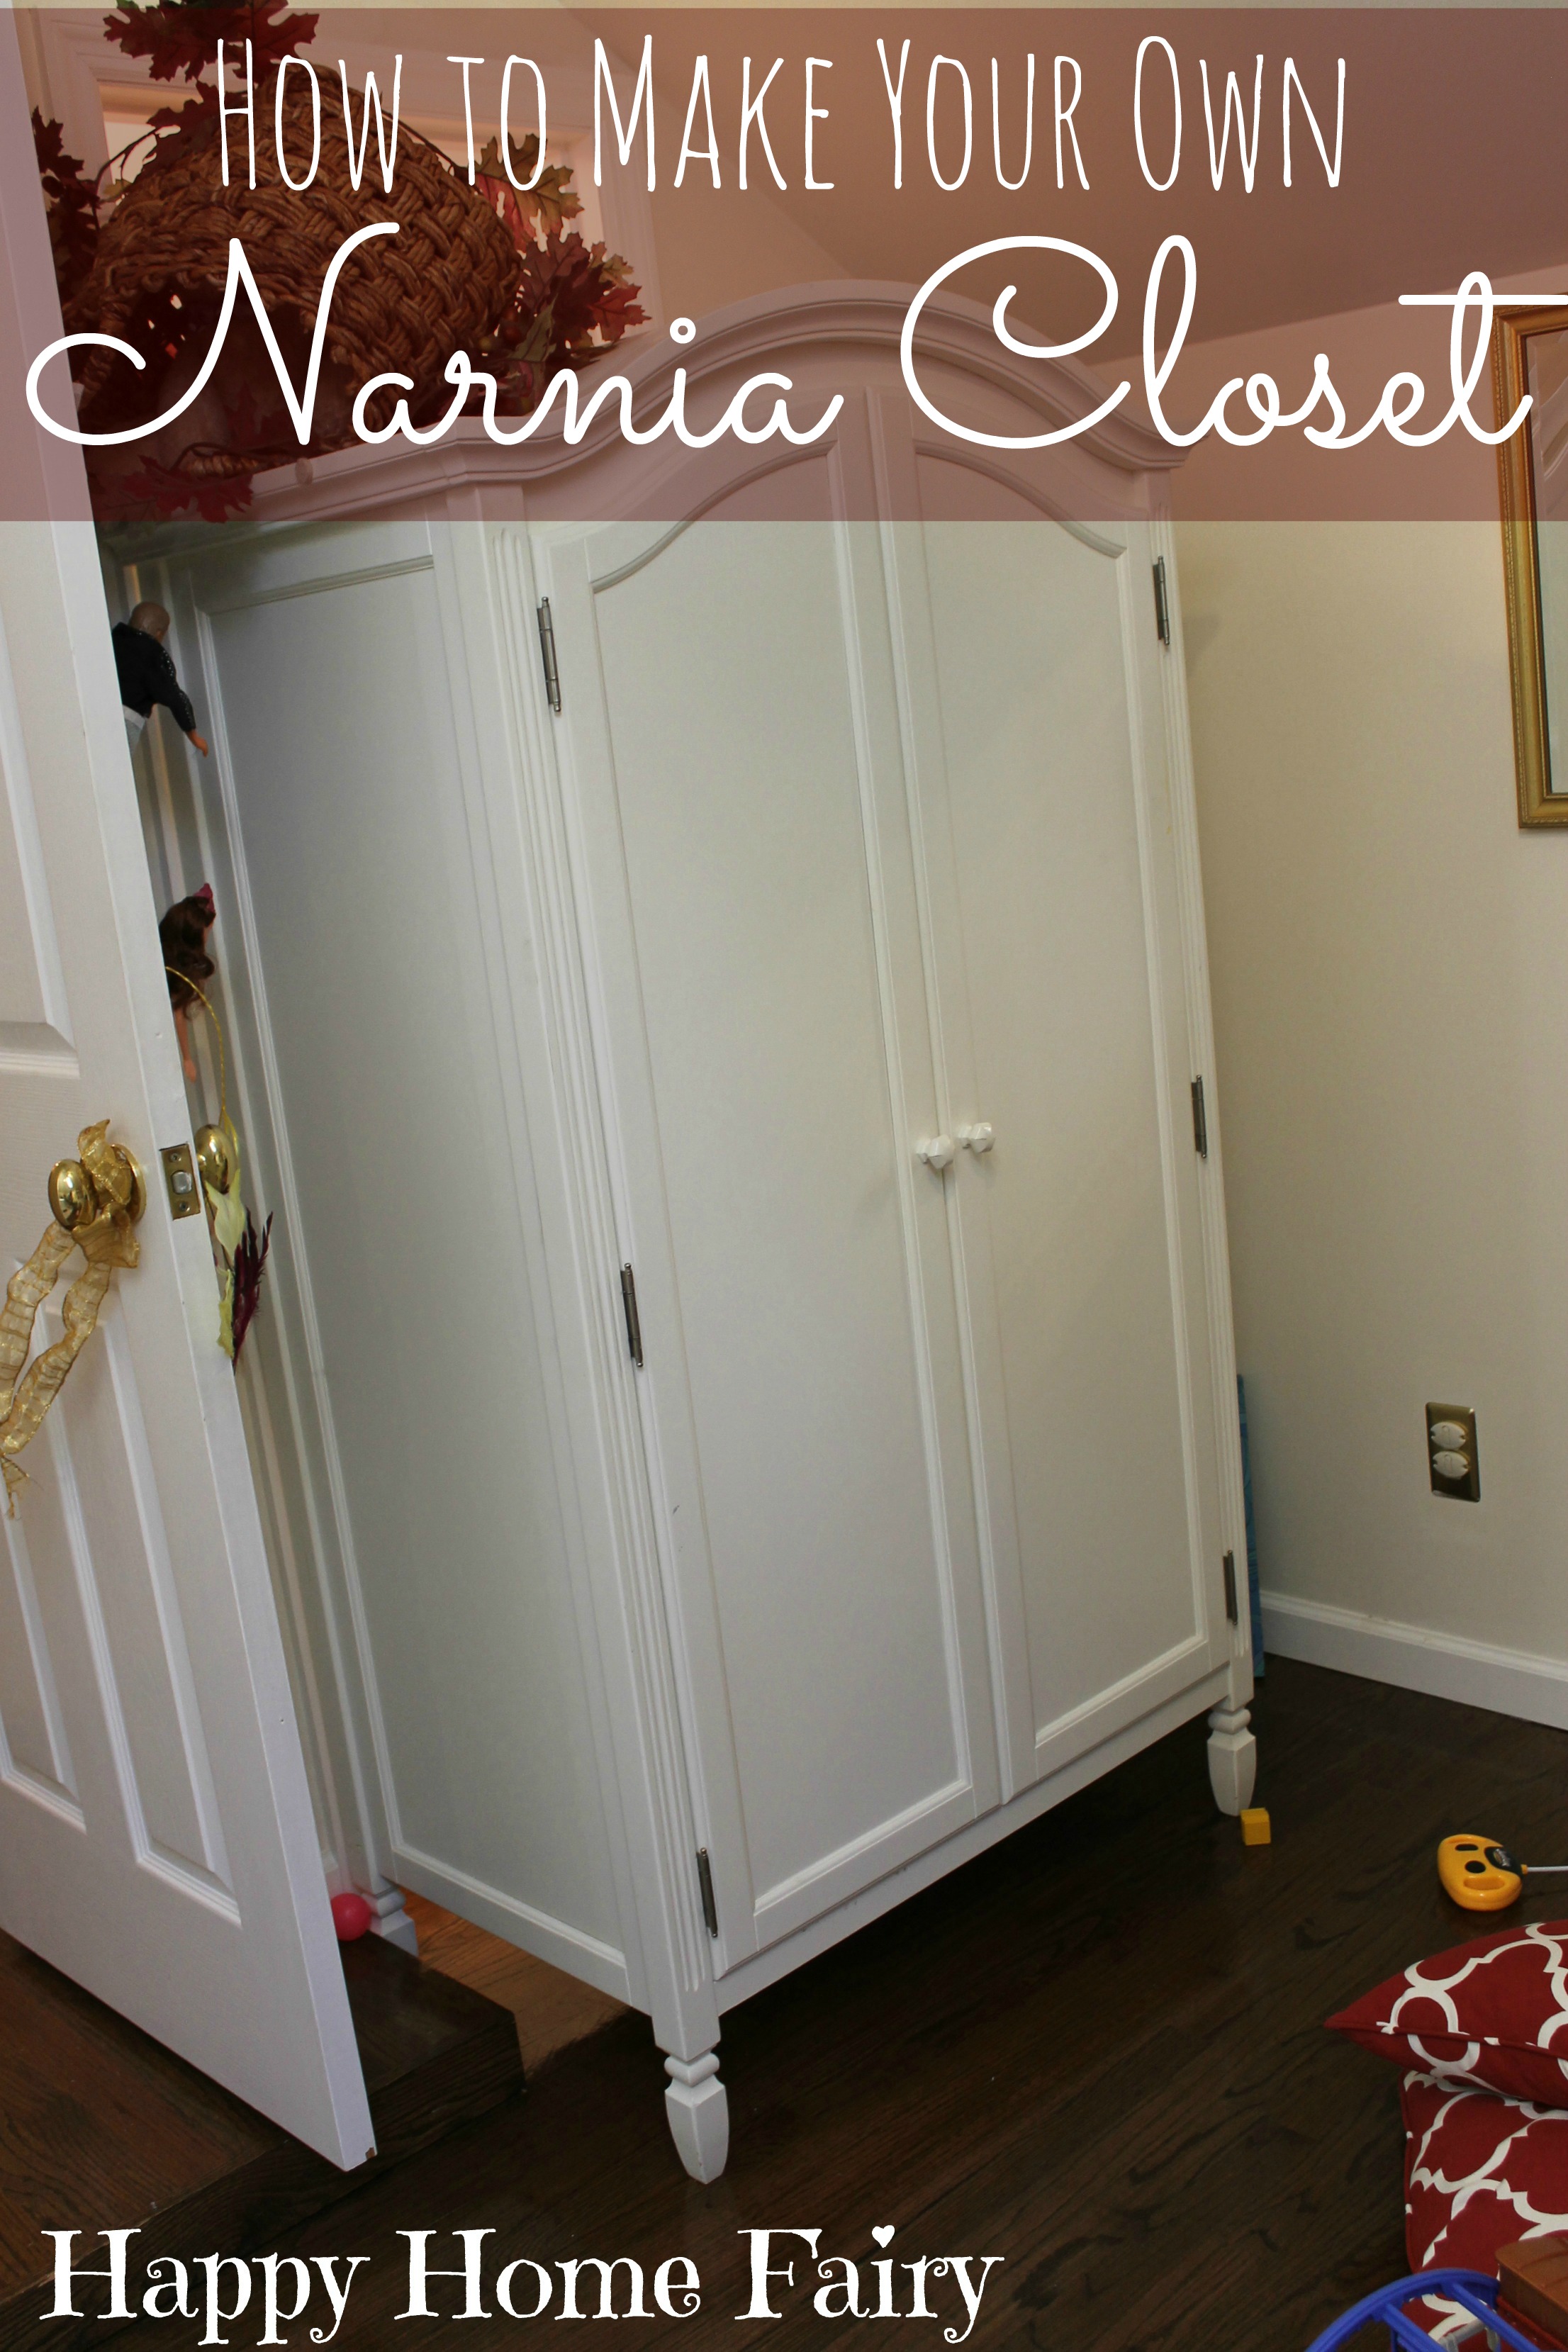 How to Make A Narnia Closet - Happy Home Fairy2212 x 3318